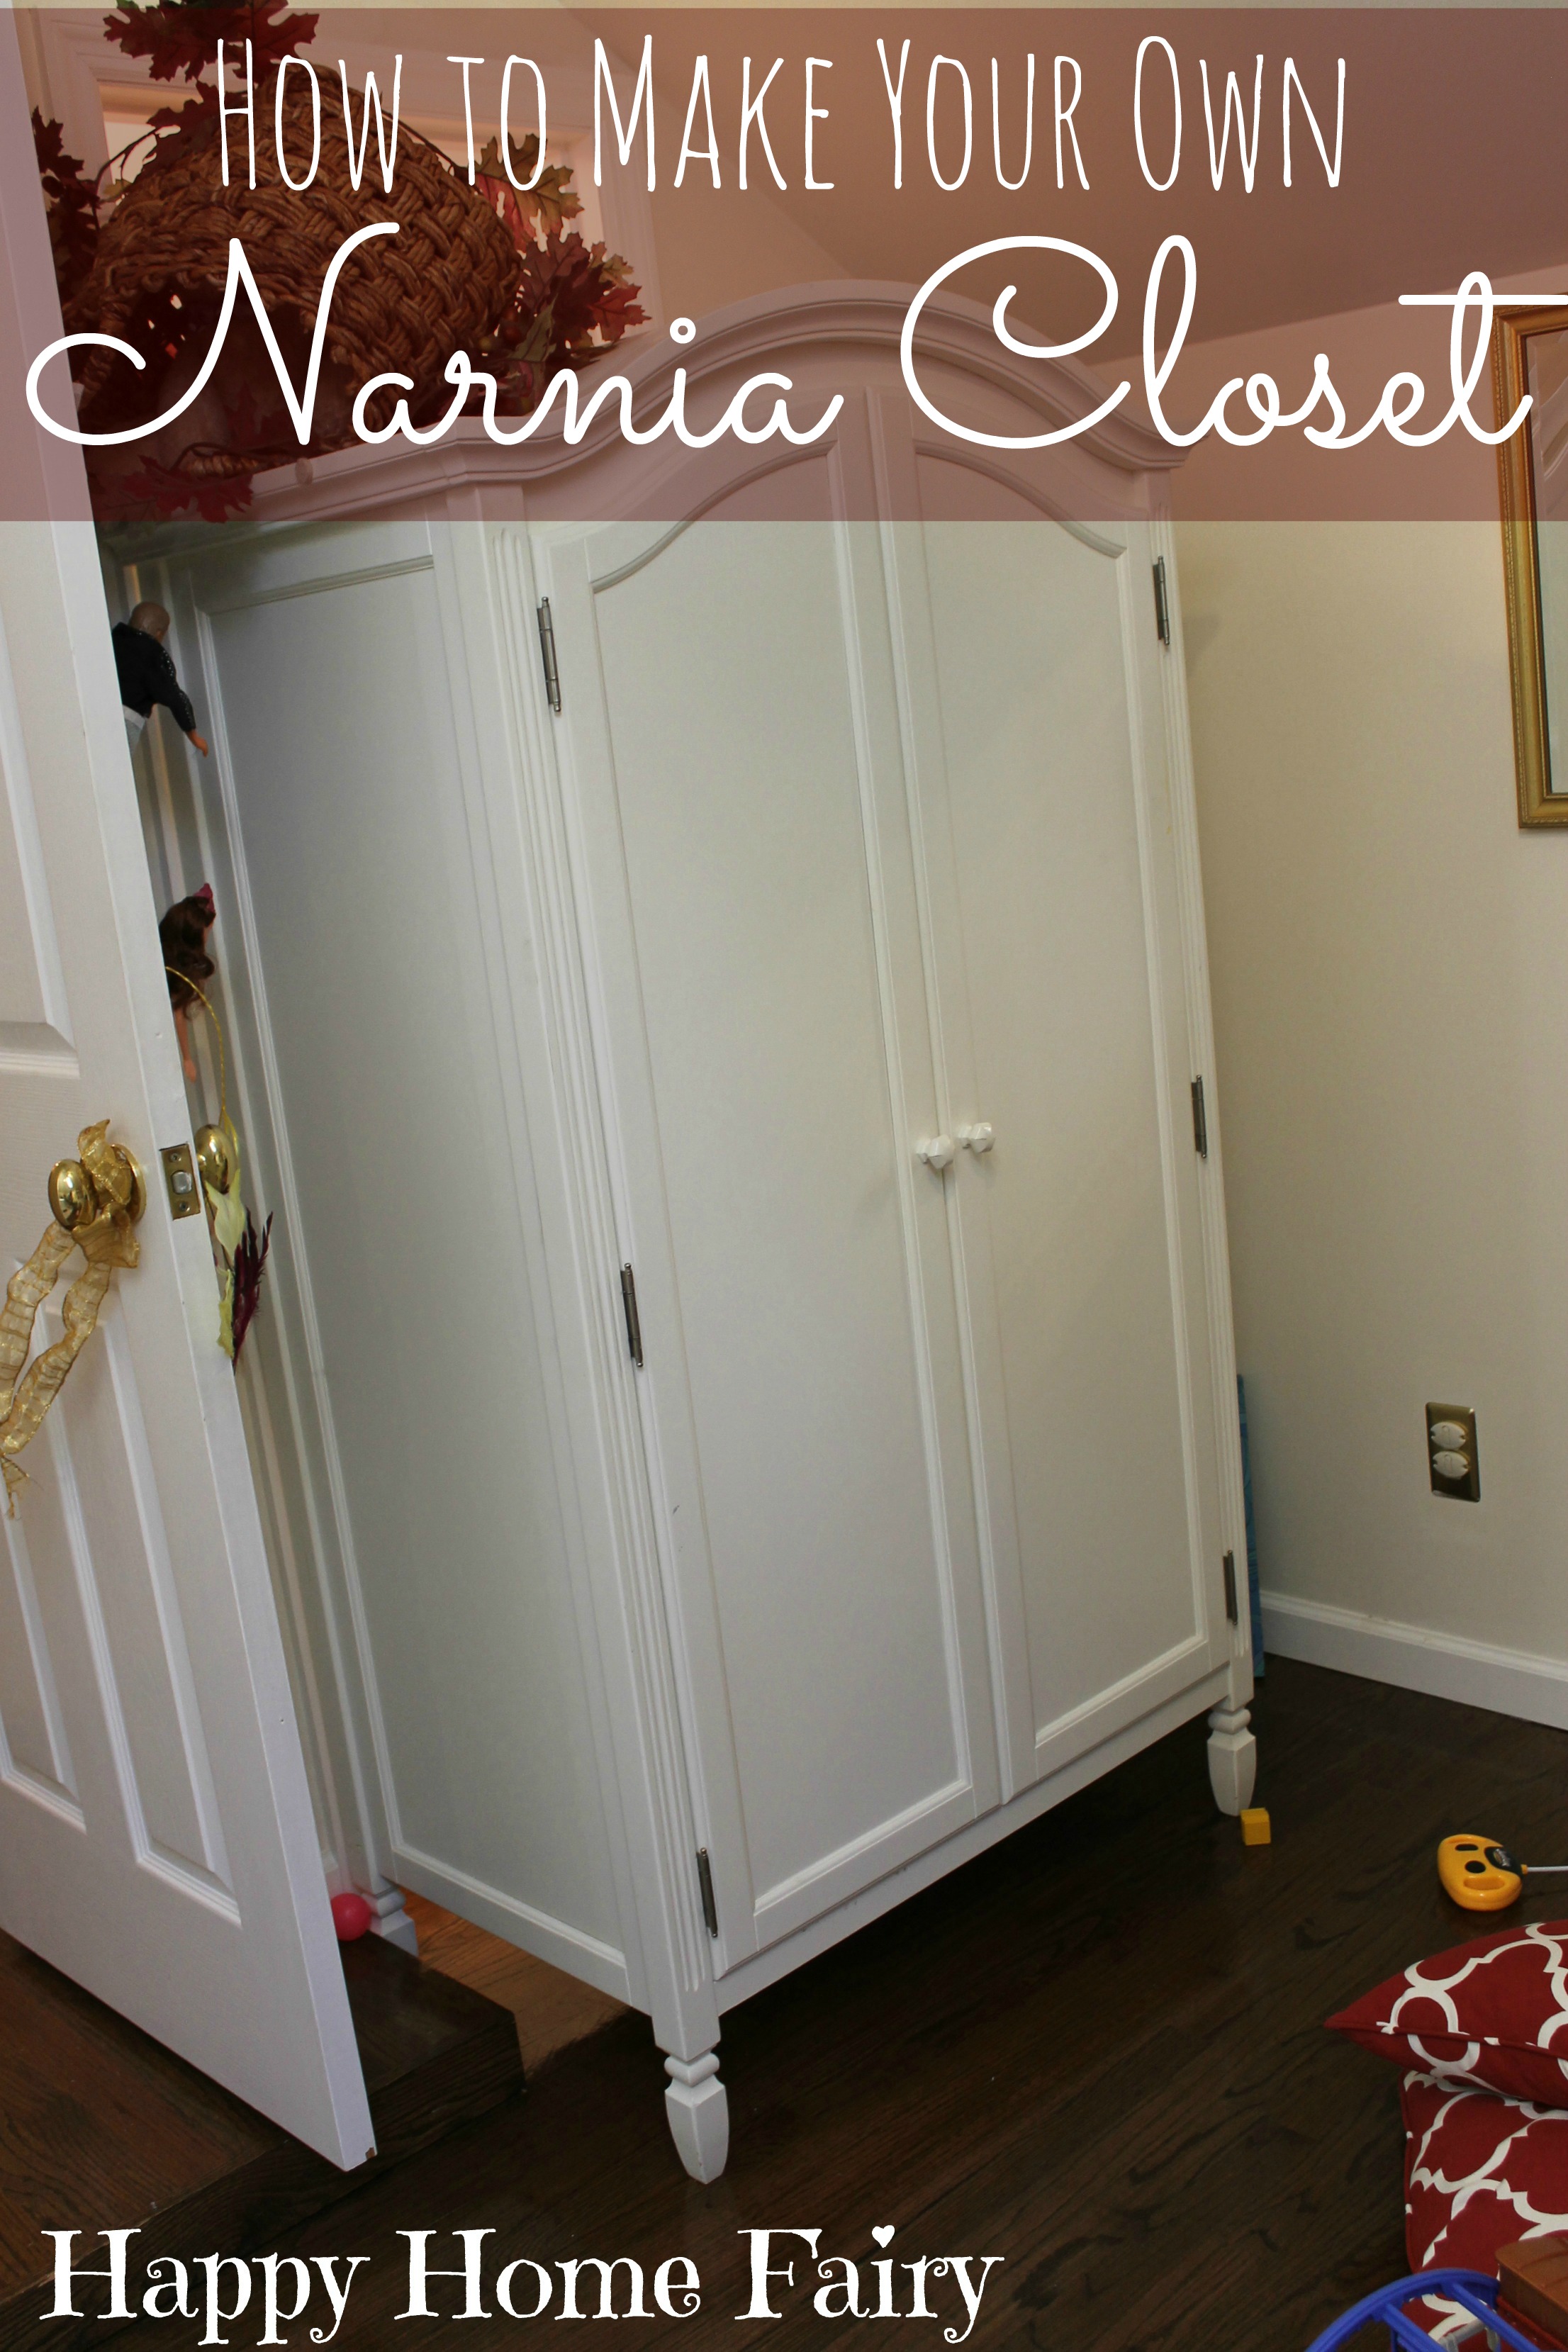 How to Make A Narnia Closet - Happy Home Fairy2212 x 3318